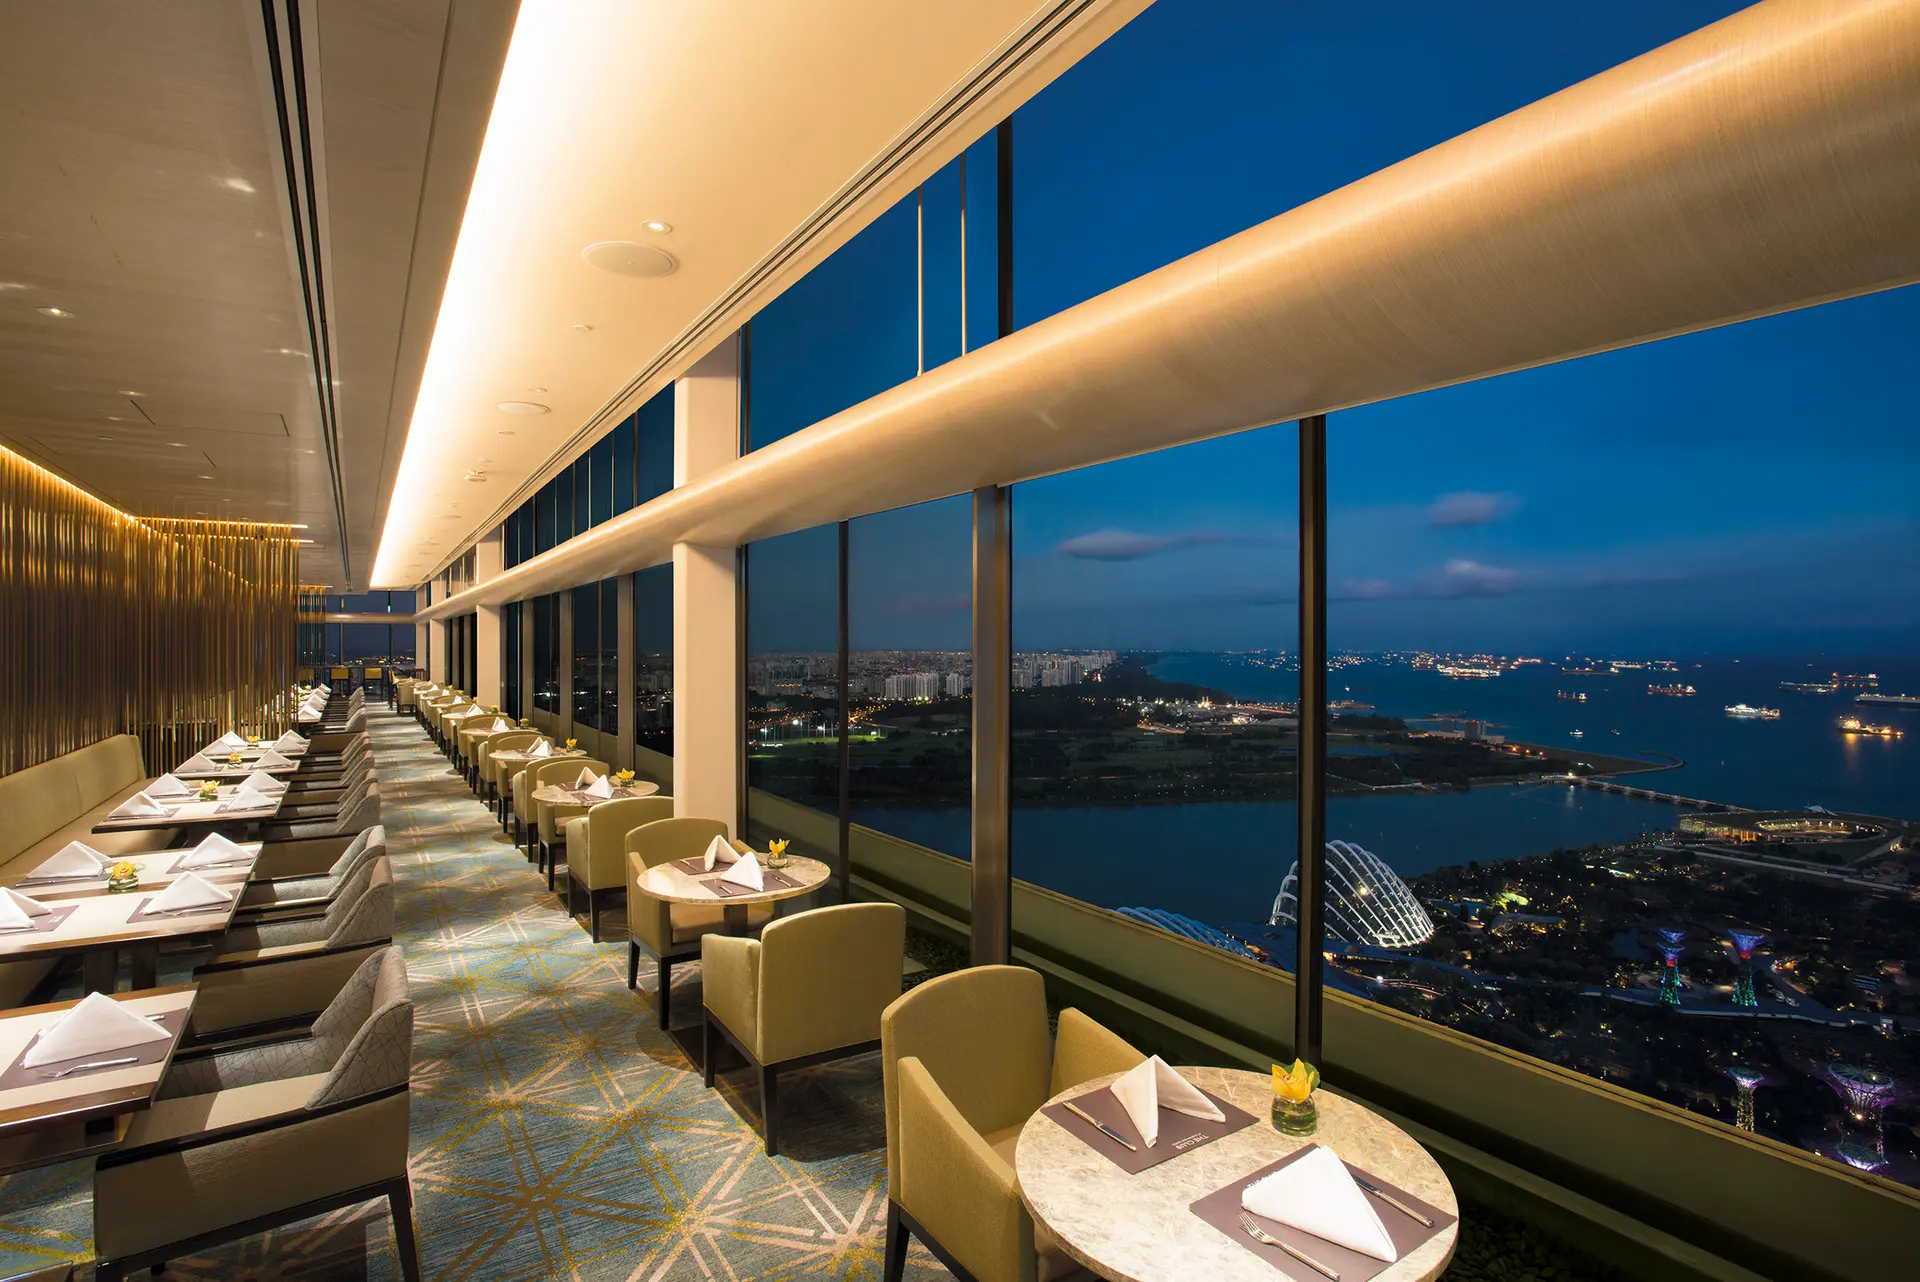 Hotel review Service & Facilities' - Marina Bay Sands - 5